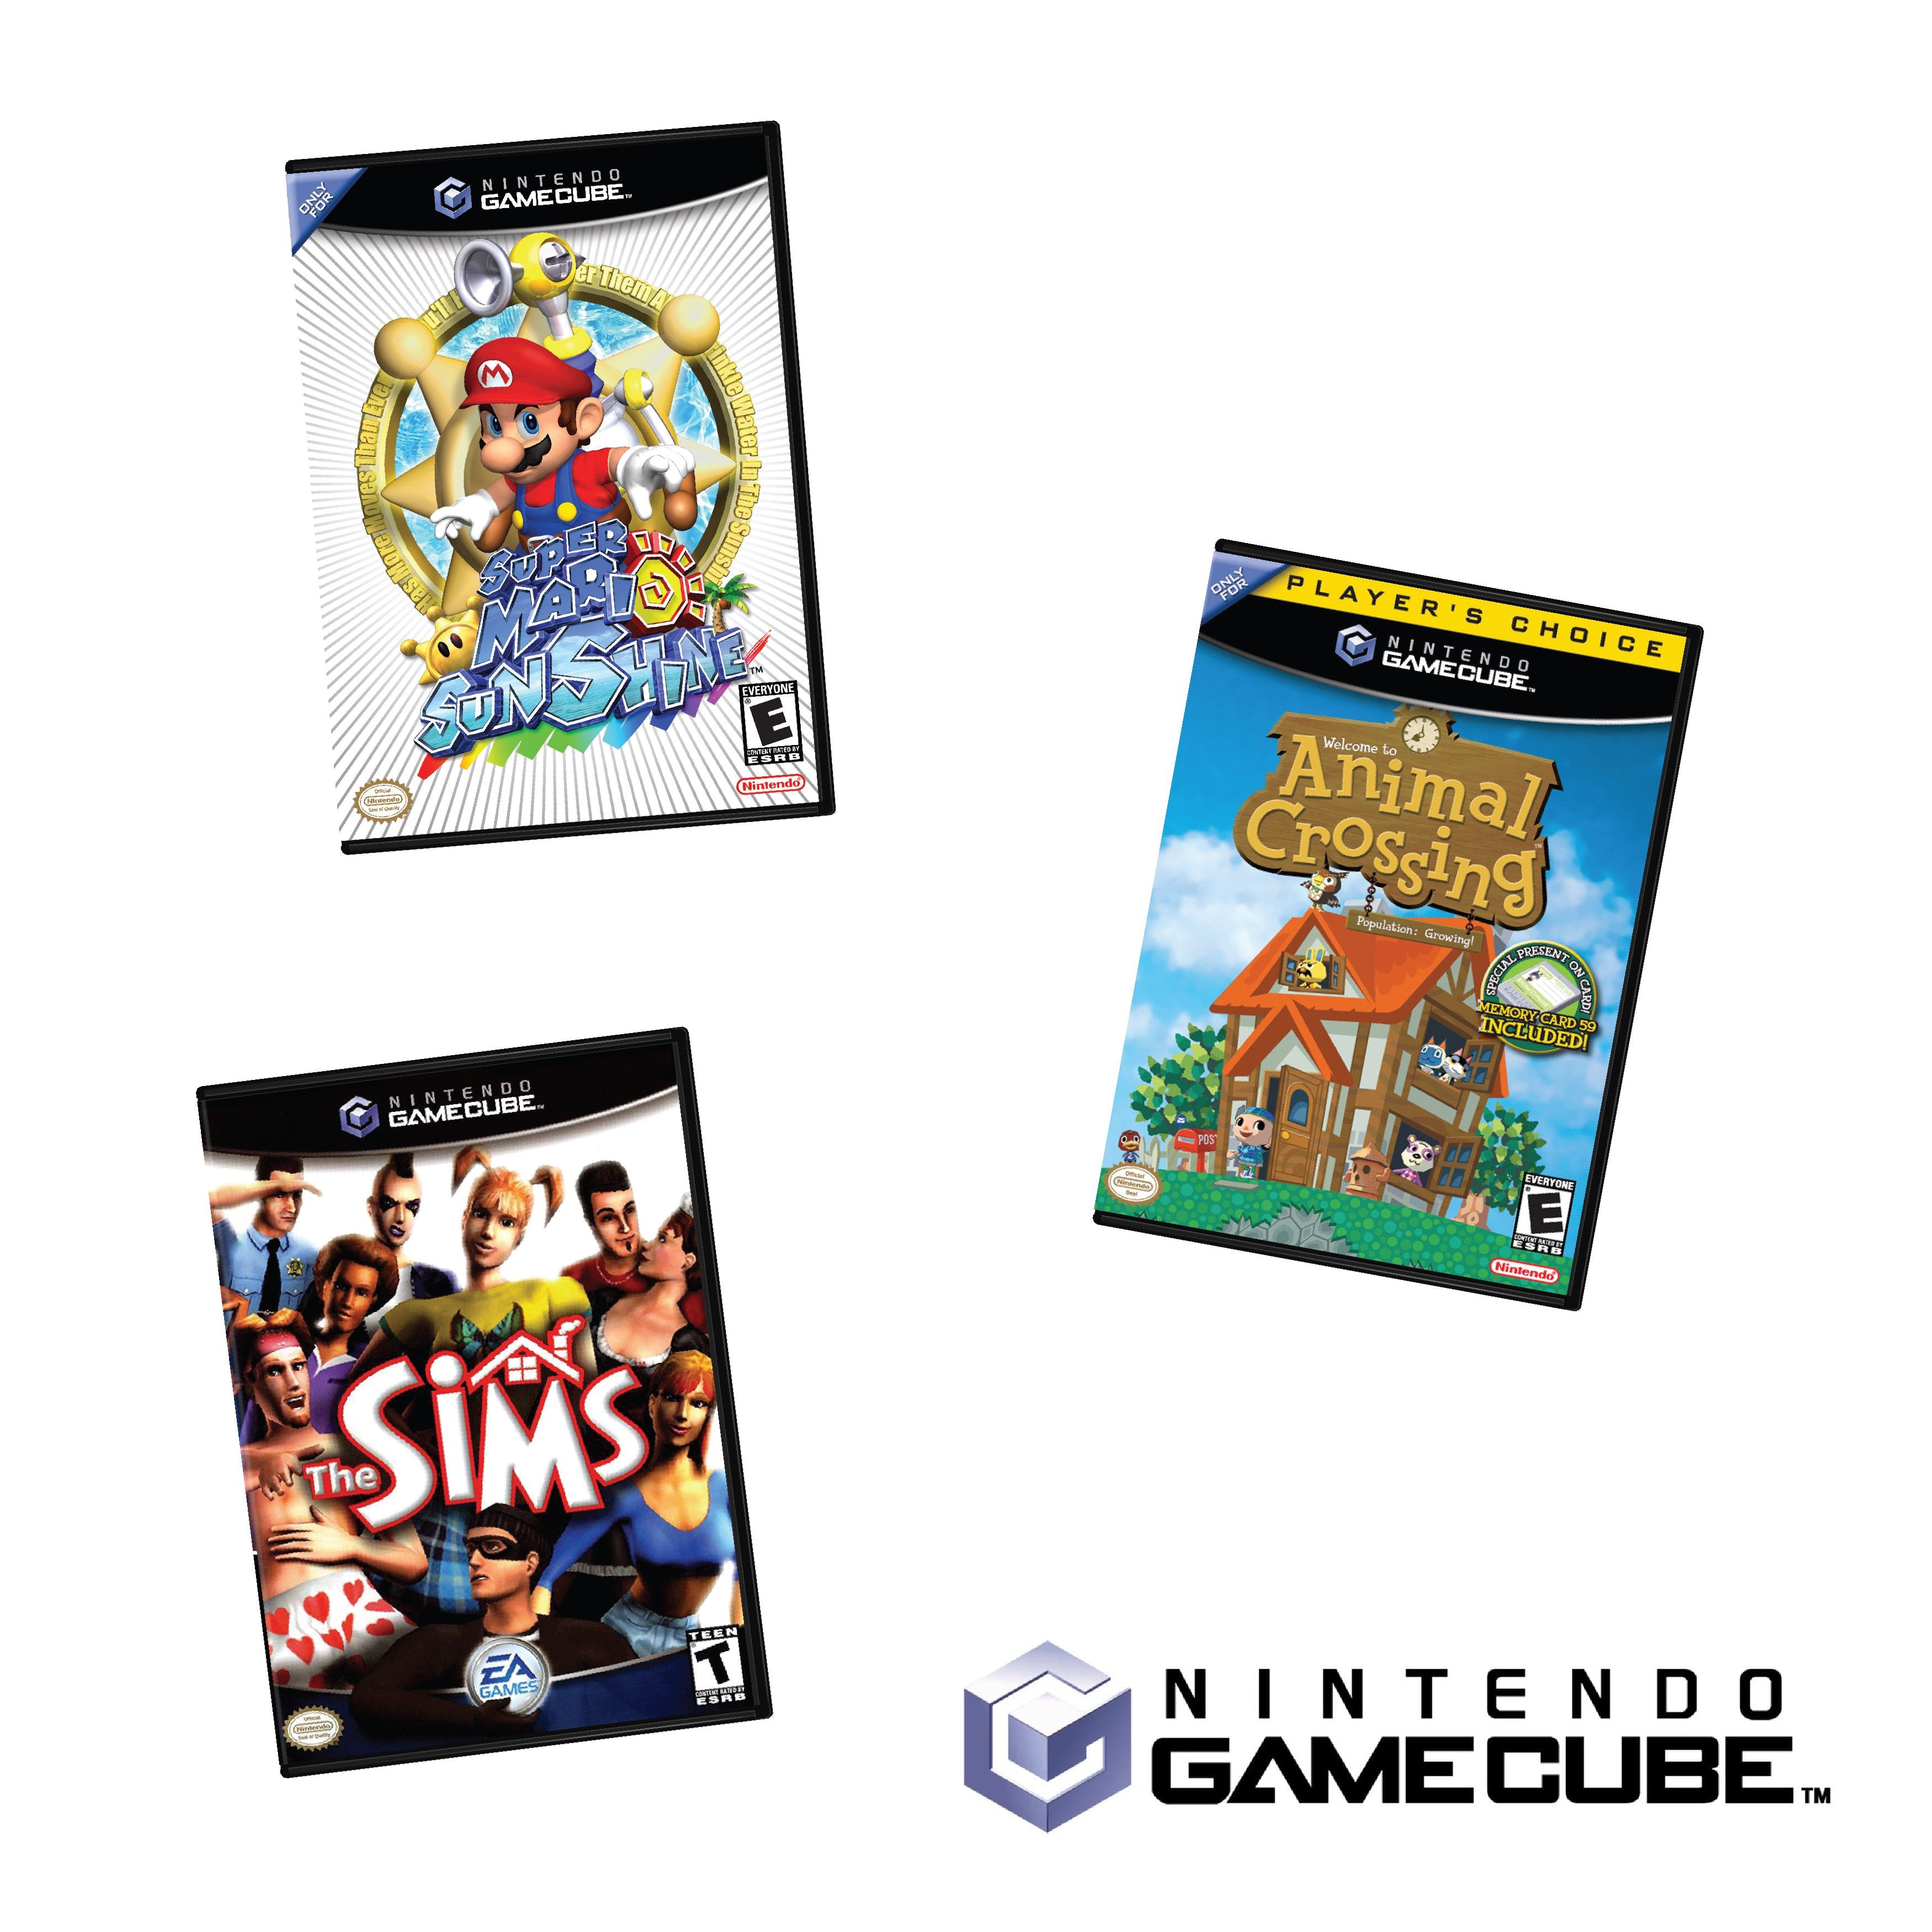 Shop Nintendo GameCube Video Games